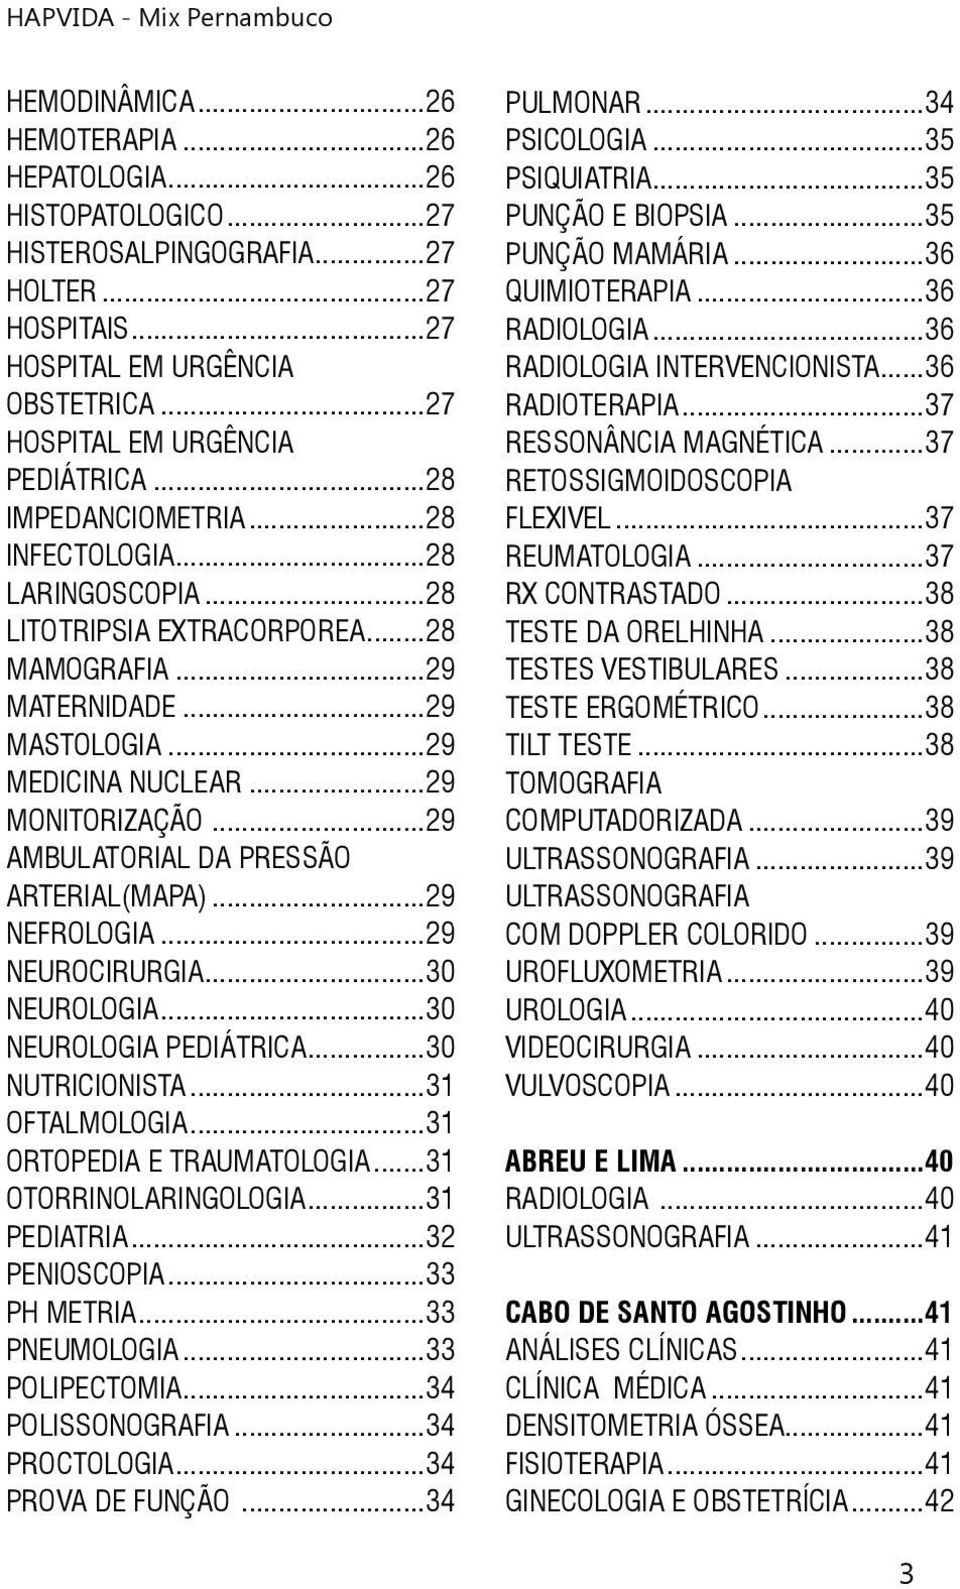 ..29 AMBULATORIAL DA PRESSÃO ARTERIAL(MAPA)...29 NEFROLOGIA...29 NEUROCIRURGIA...30 NEUROLOGIA...30 NEUROLOGIA PEDIÁTRICA...30 NUTRICIONISTA...31 OFTALMOLOGIA...31 ORTOPEDIA E TRAUMATOLOGIA.